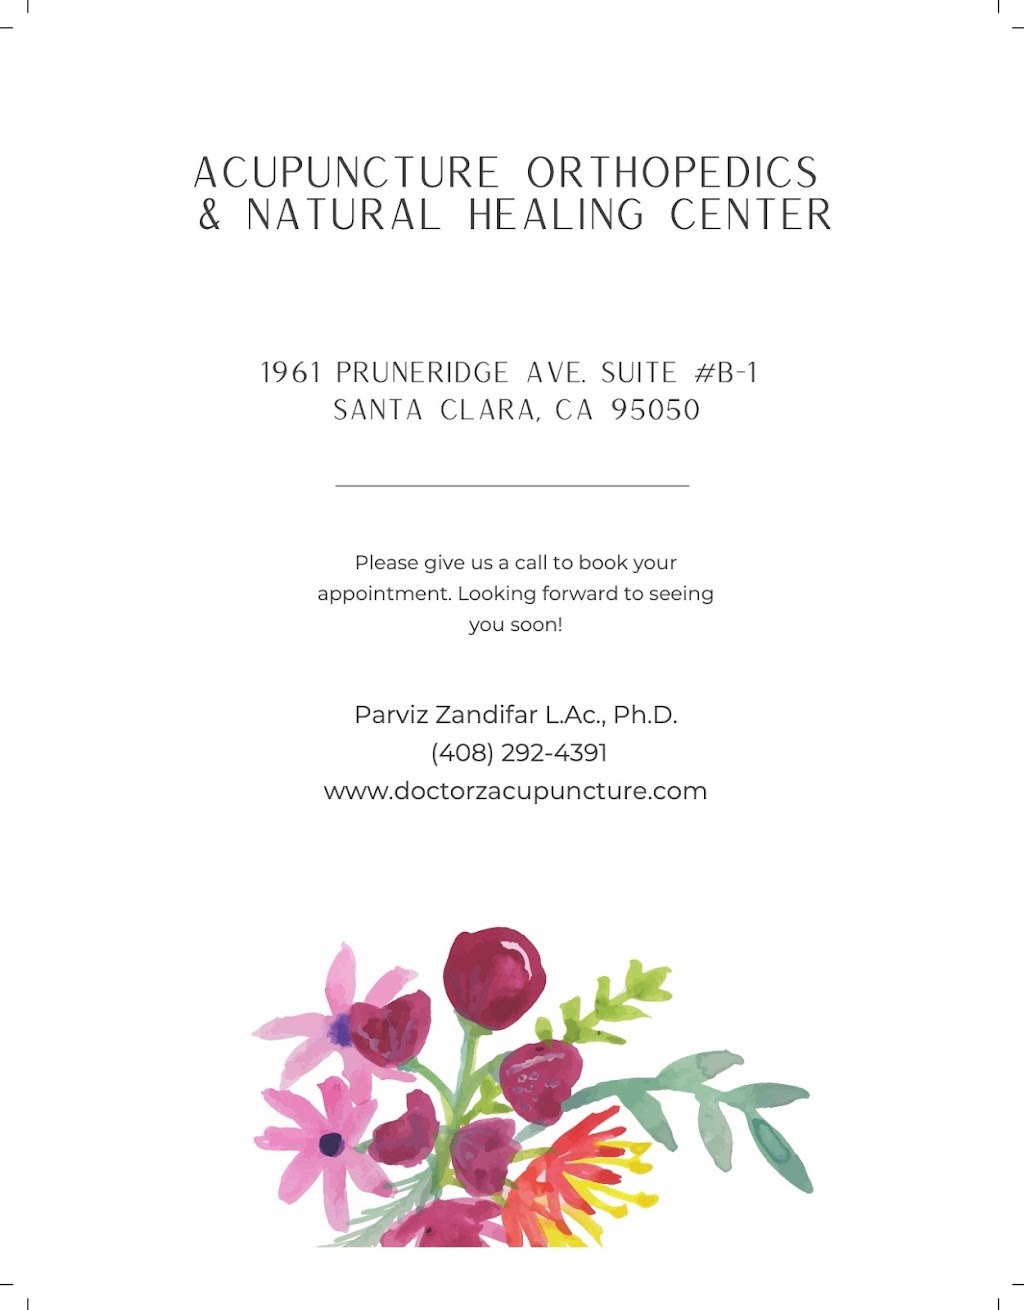 Parviz Zandifar LAC PhD | Acupuncture Orthopedics and Natural Healing Center 1961 Pruneridge Ave., Suite # B-1, Santa Clara, CA 95050 | Phone: (408) 292-4391